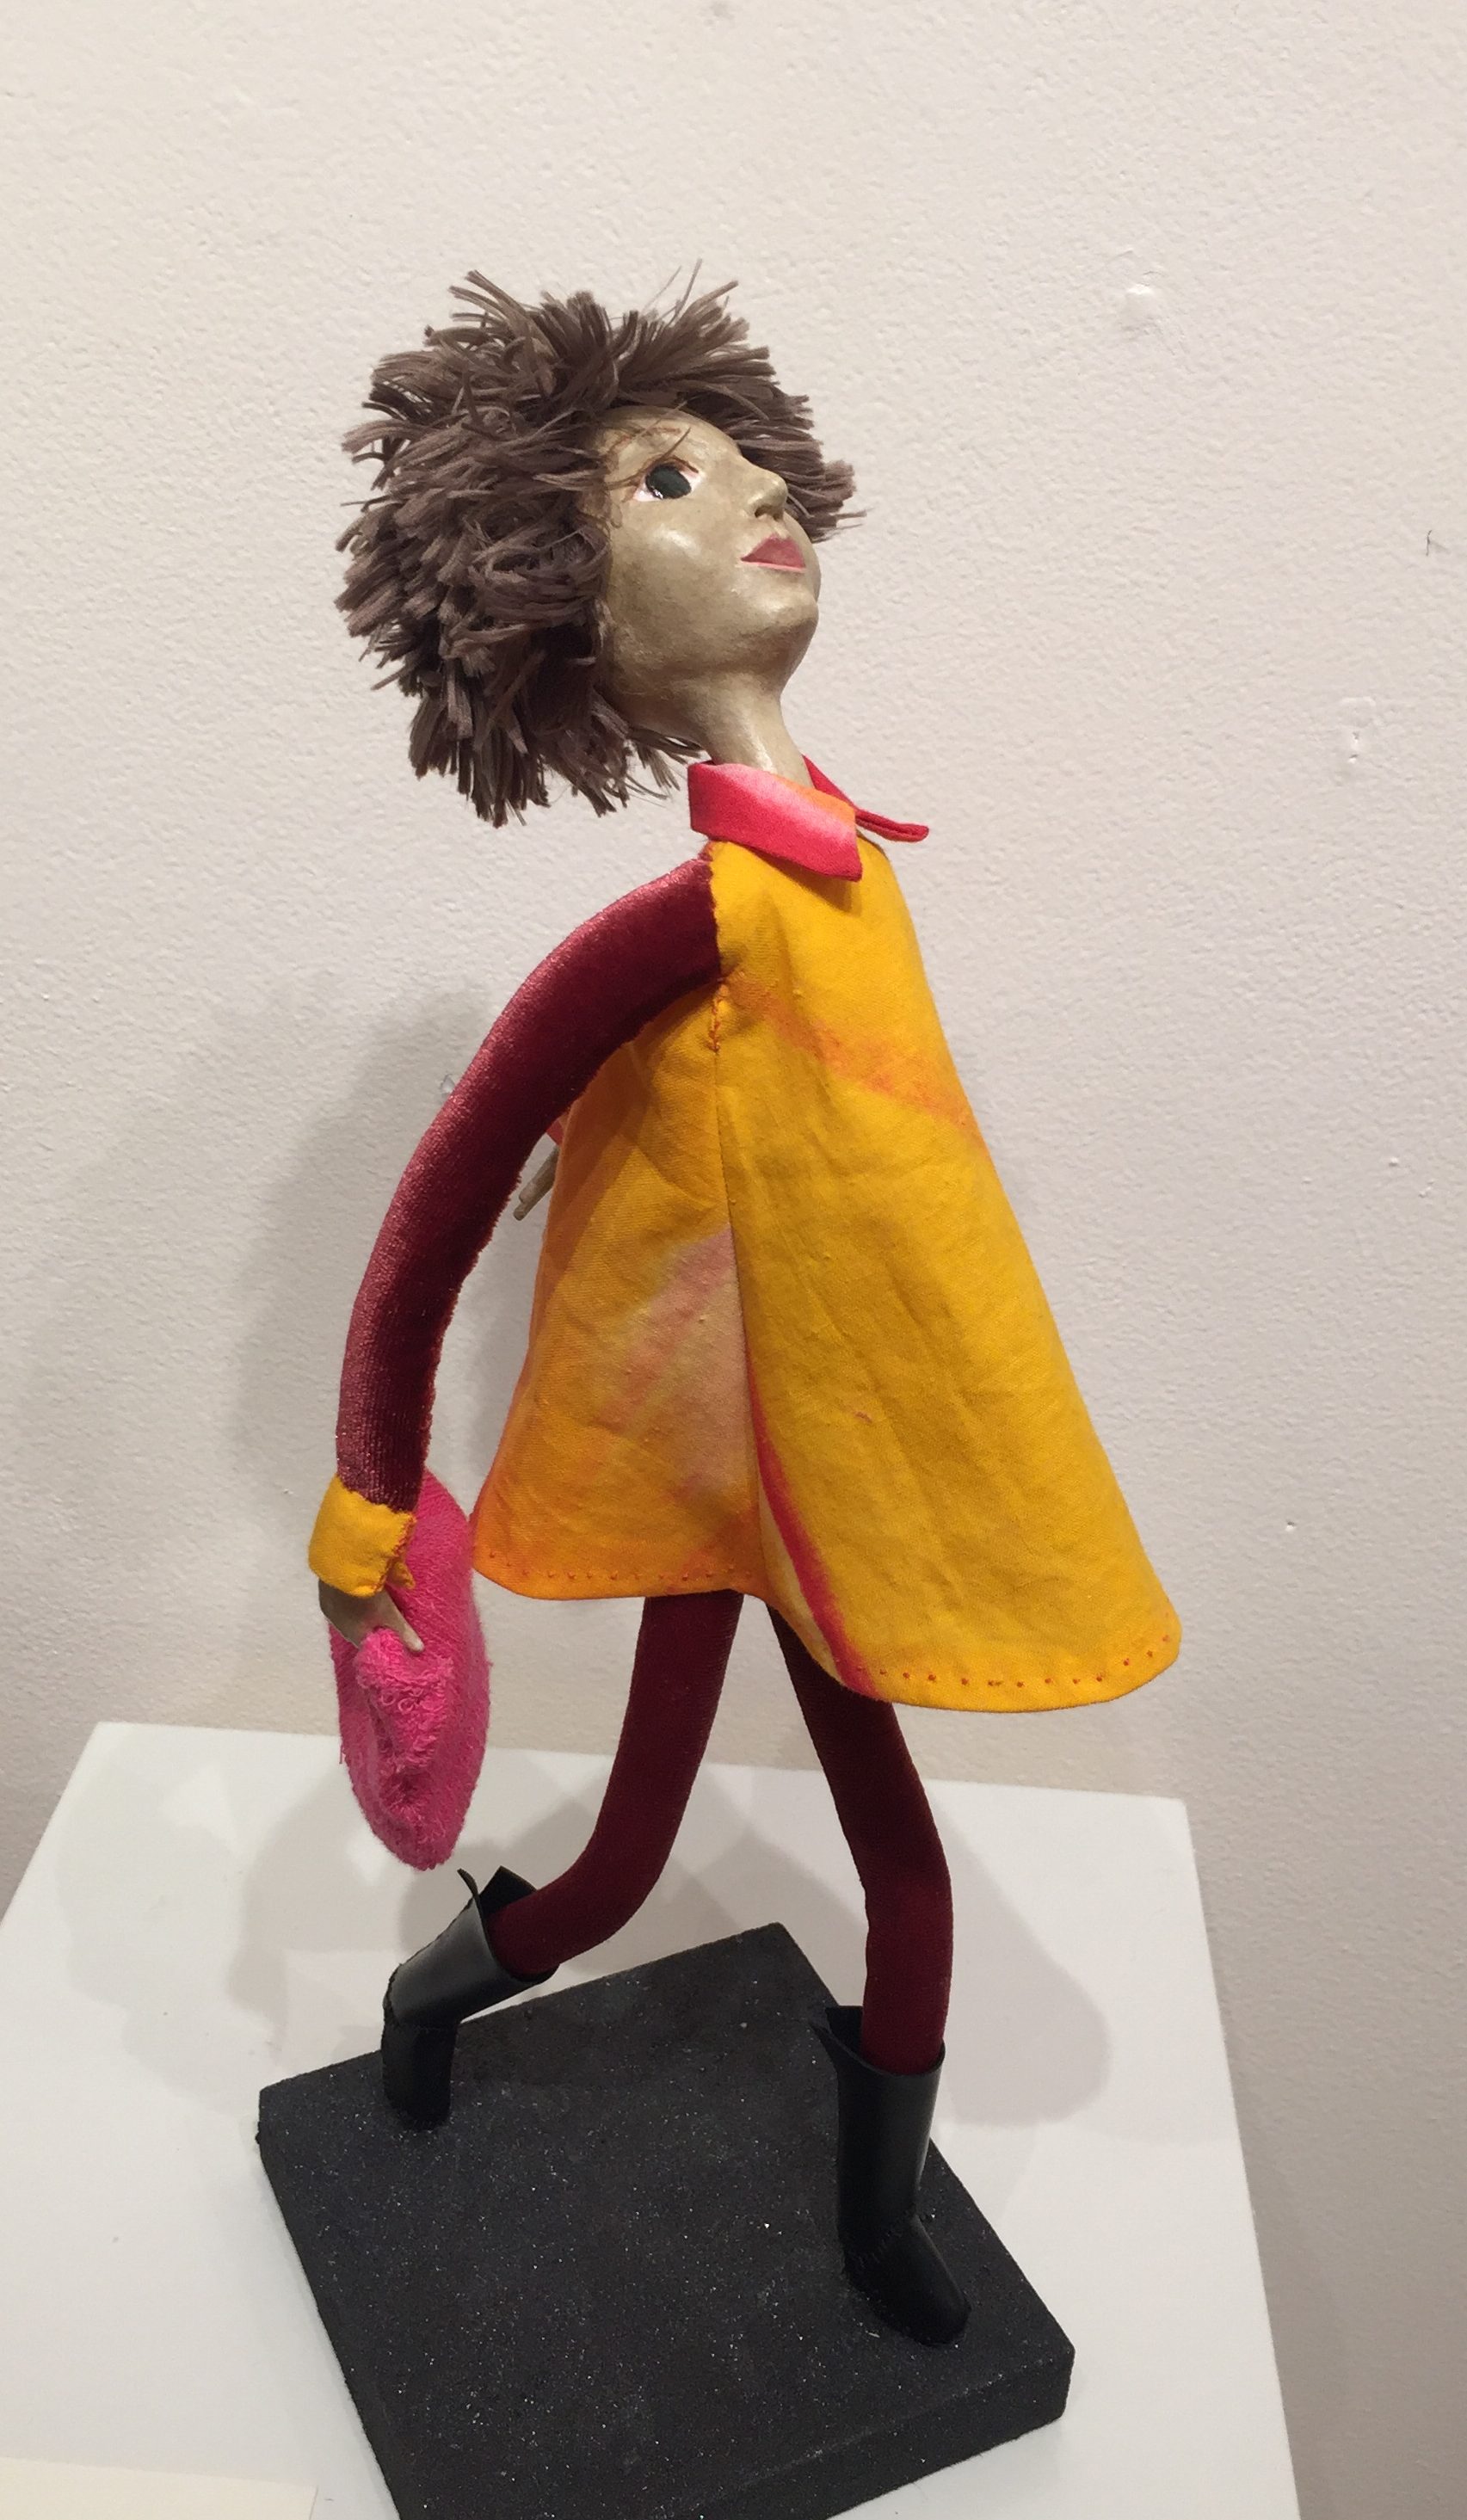 March-ed art doll figure sculpture